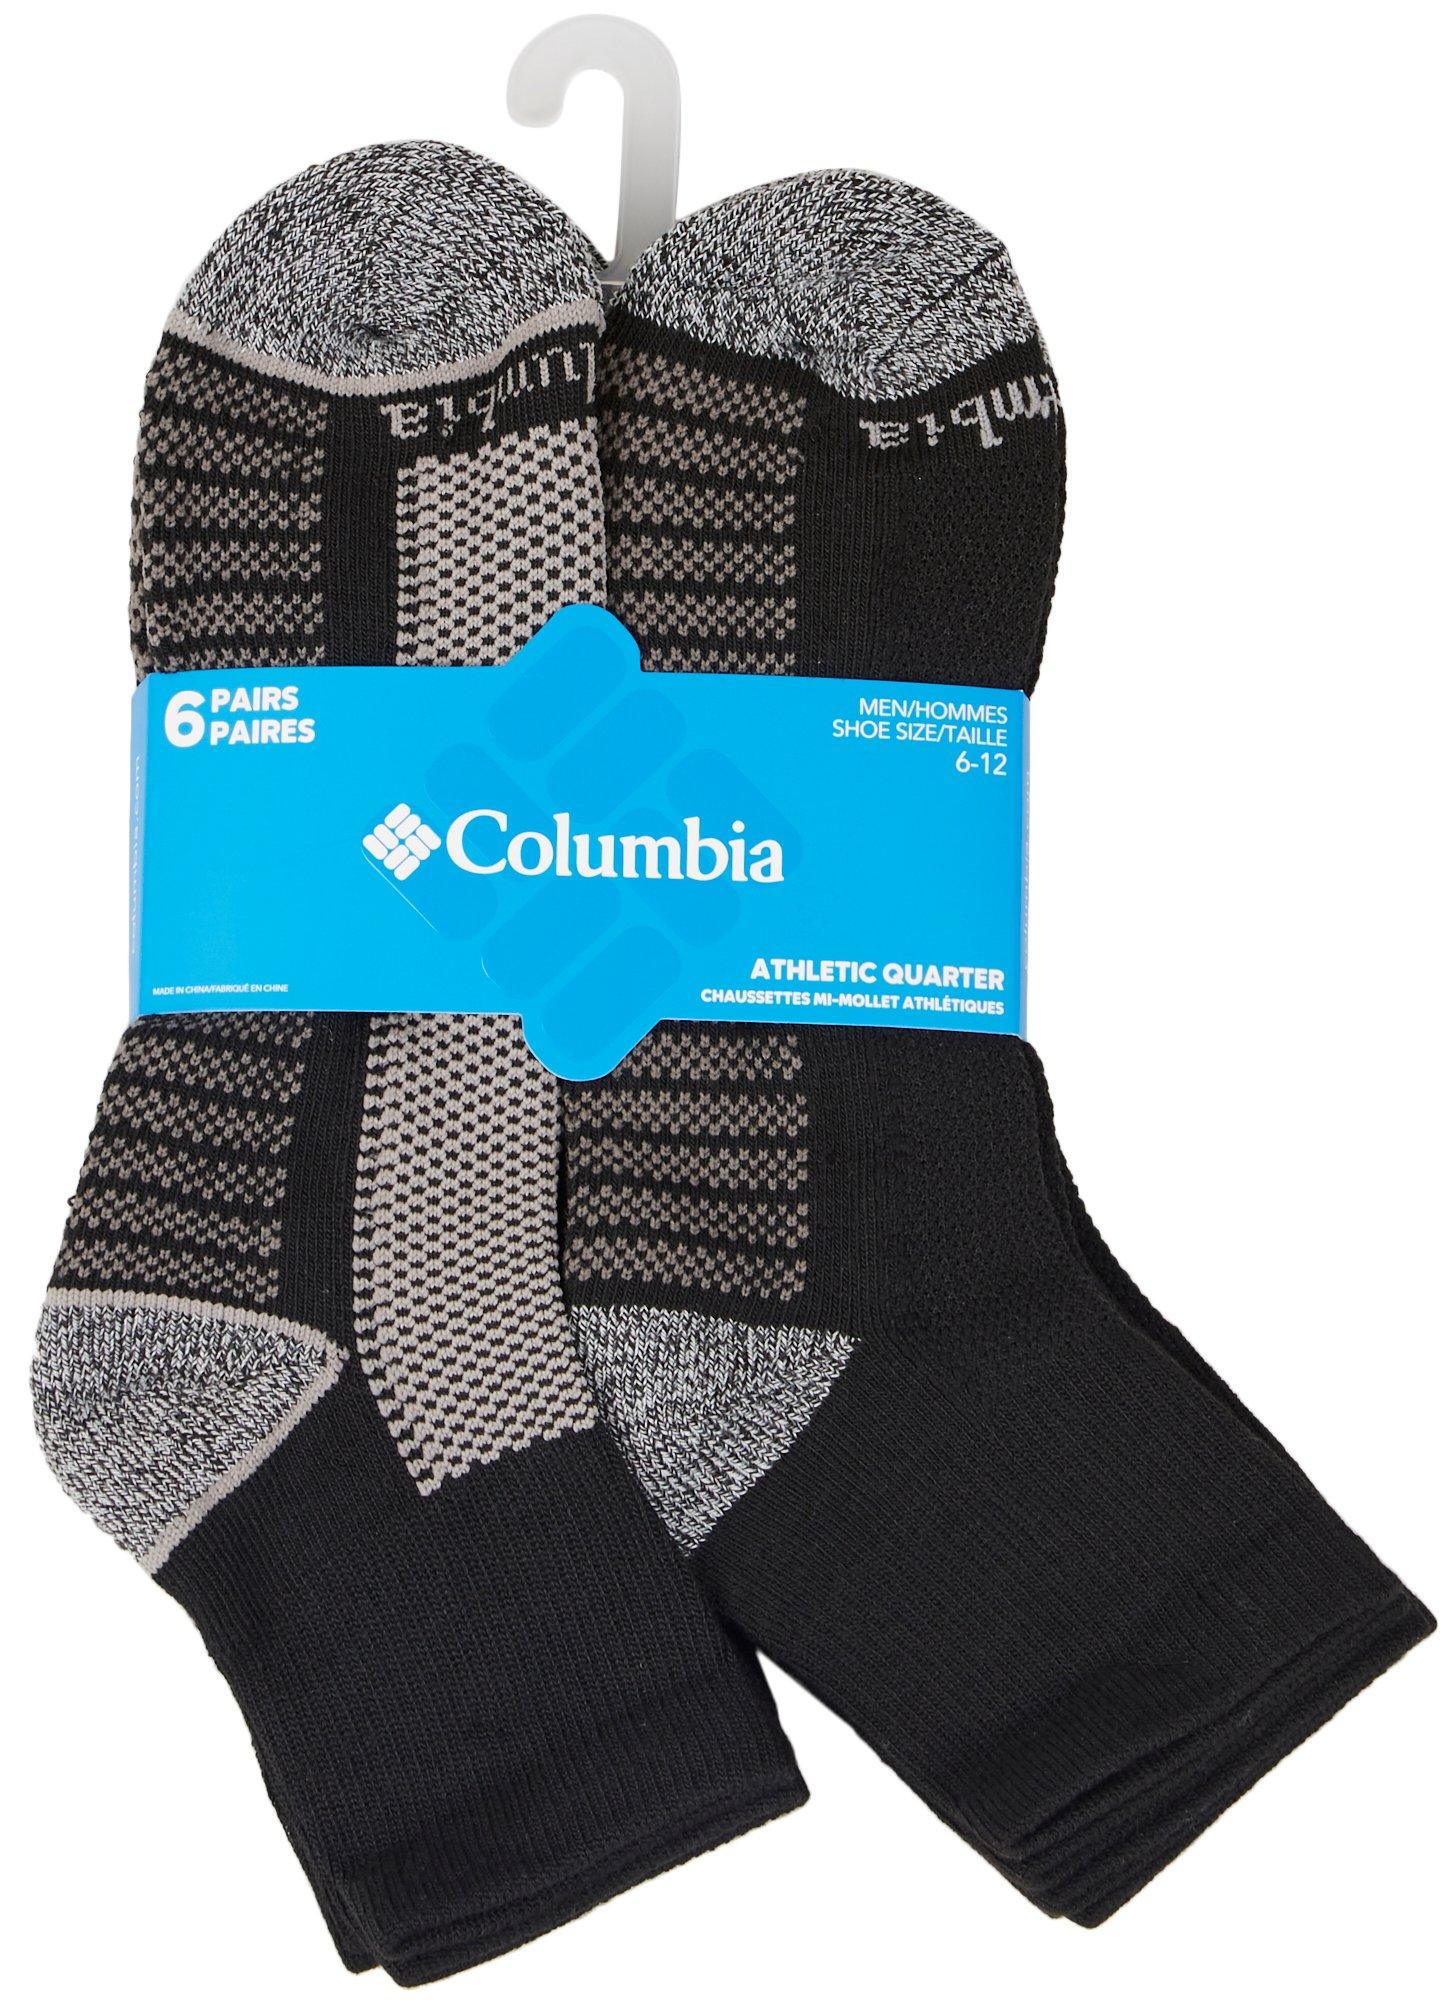 Columbia Mens 6-pk. Athletic Quarter Socks